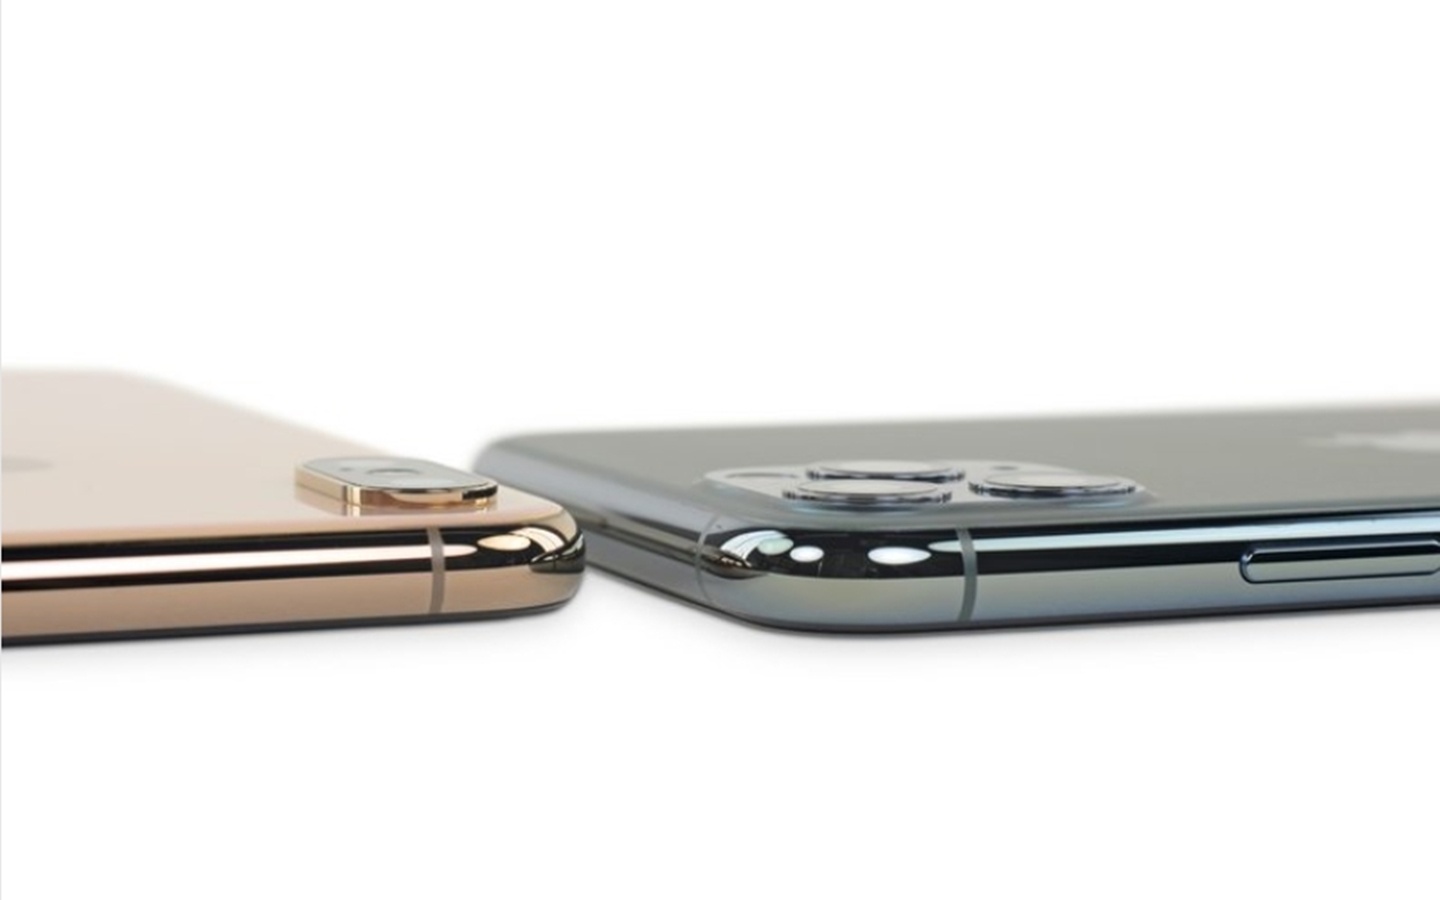 iFixit拆解iPhone 11 Pro Max：超大L形電池、雙主機板設計，並無外傳額外的2GB相機記憶體